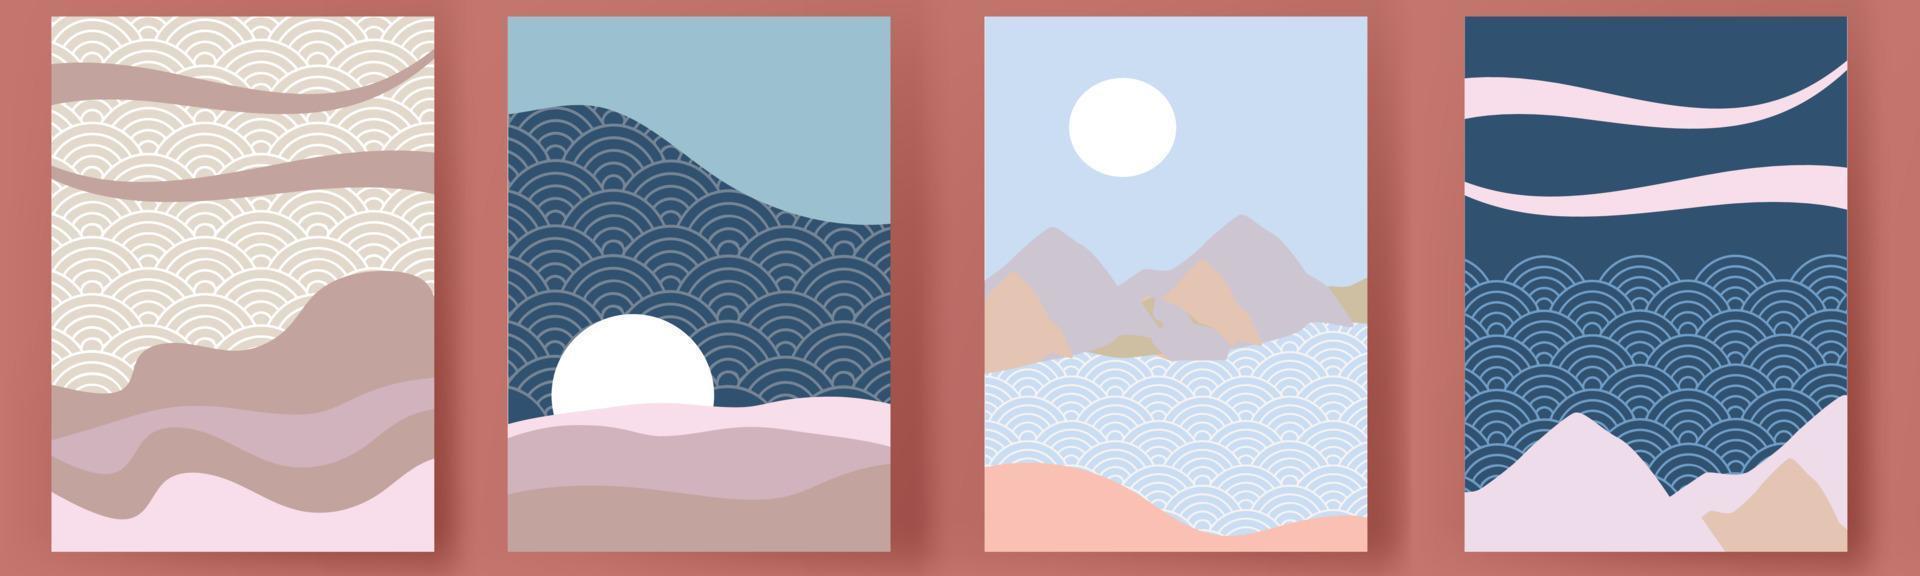 conjunto de vetores de arte minimalista moderno modelo japonês. fundo do cartão geométrico set.abstract capa design banner estilo brochura.